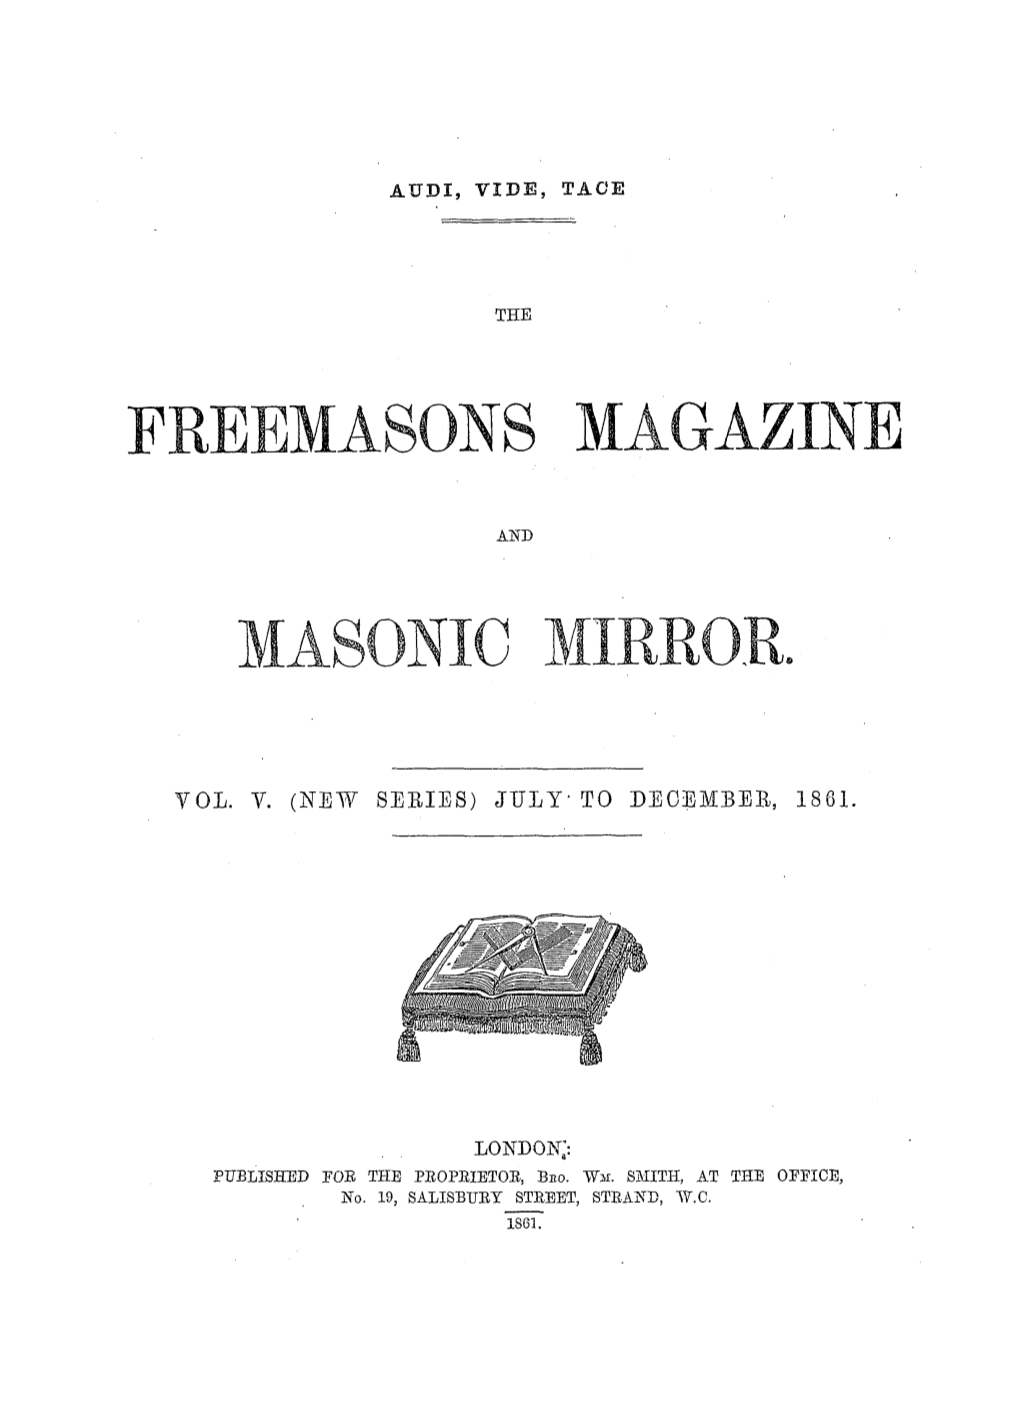 Freemasons Magazine